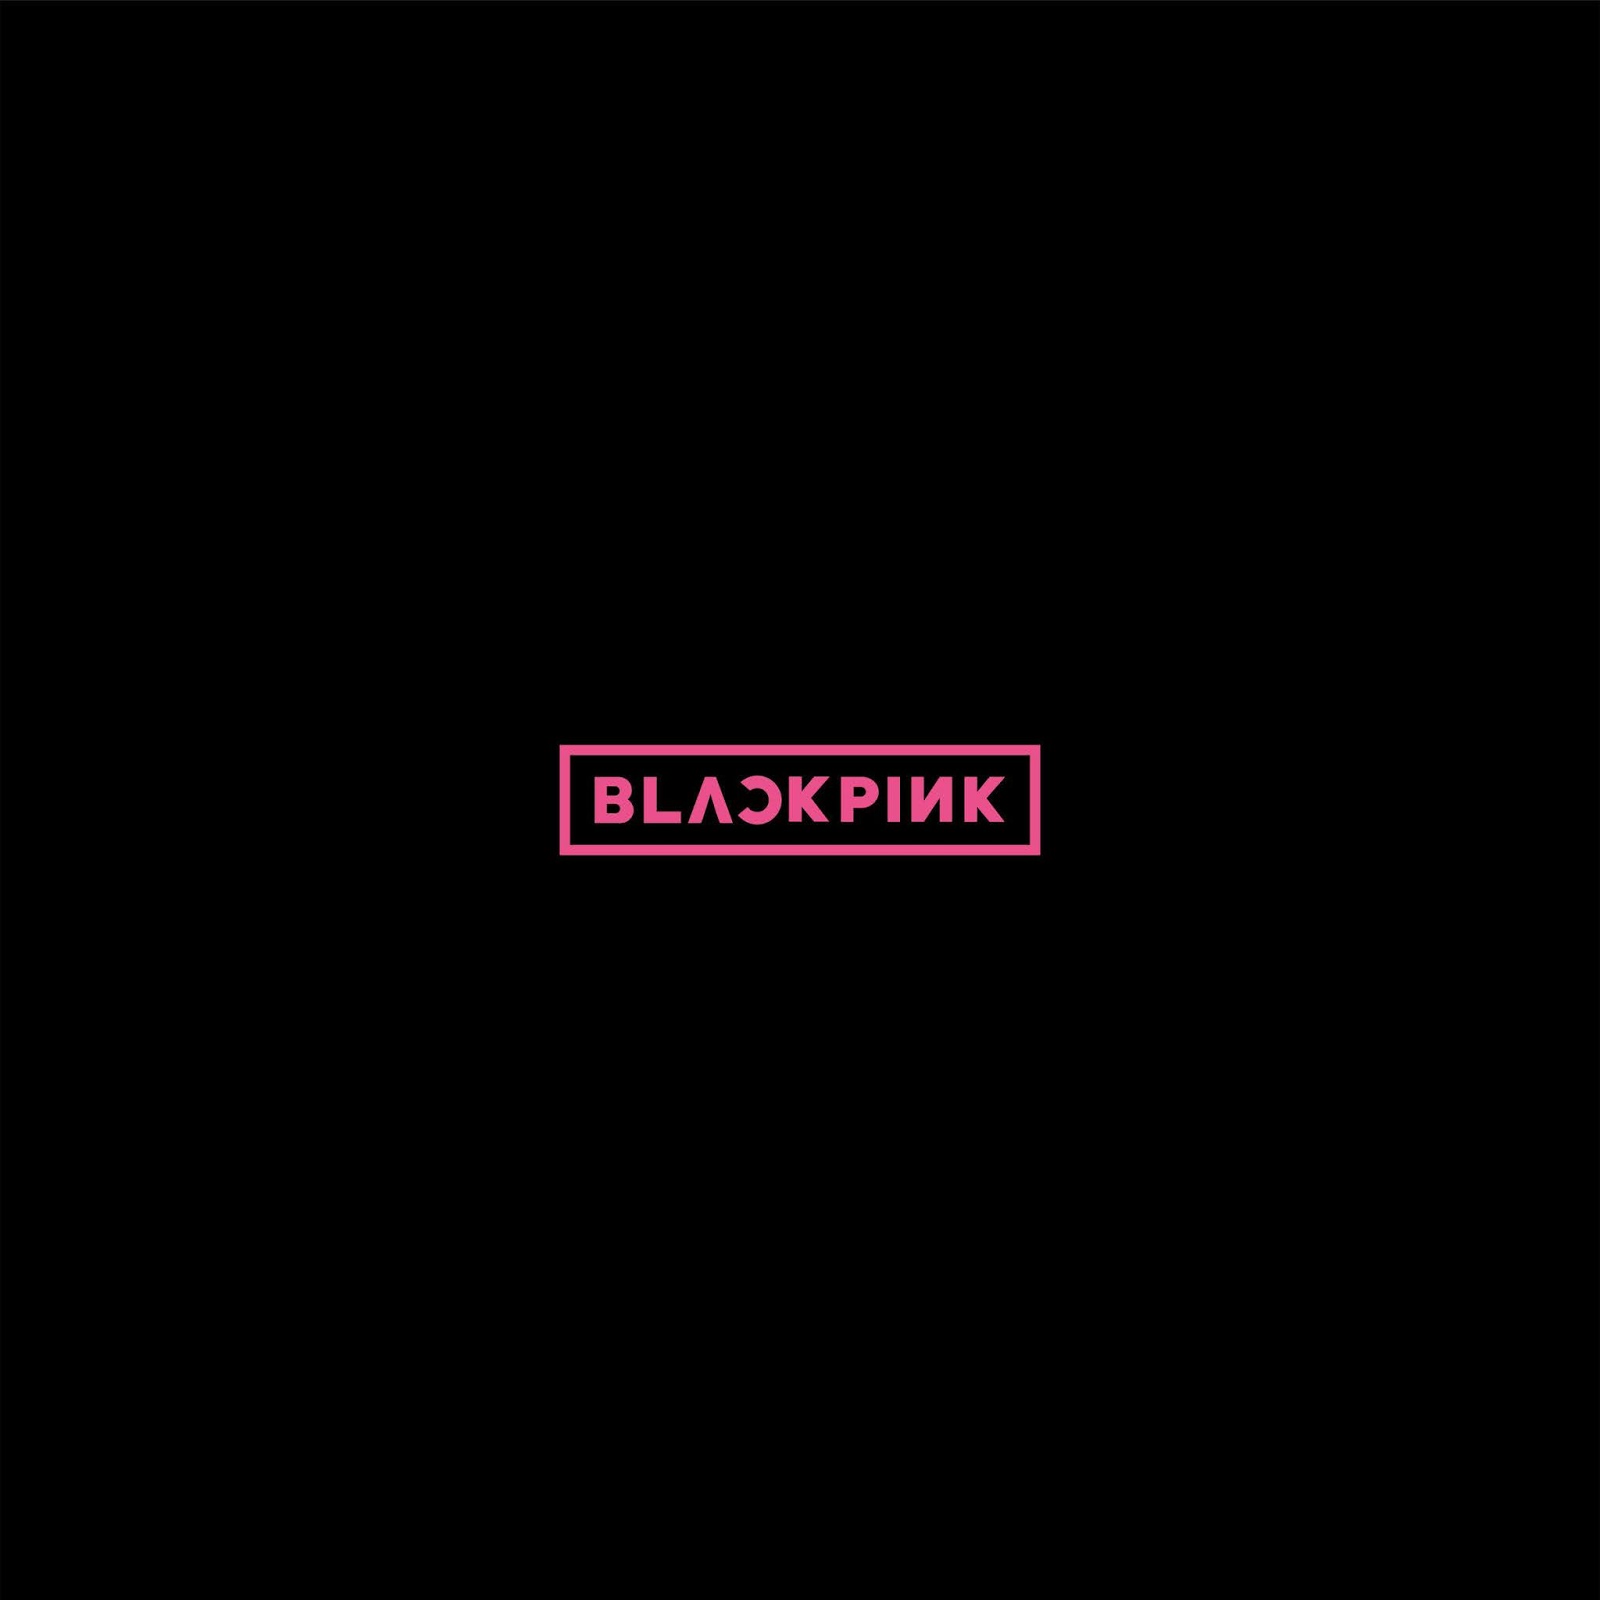 BLACKPINK Discografia / Discography